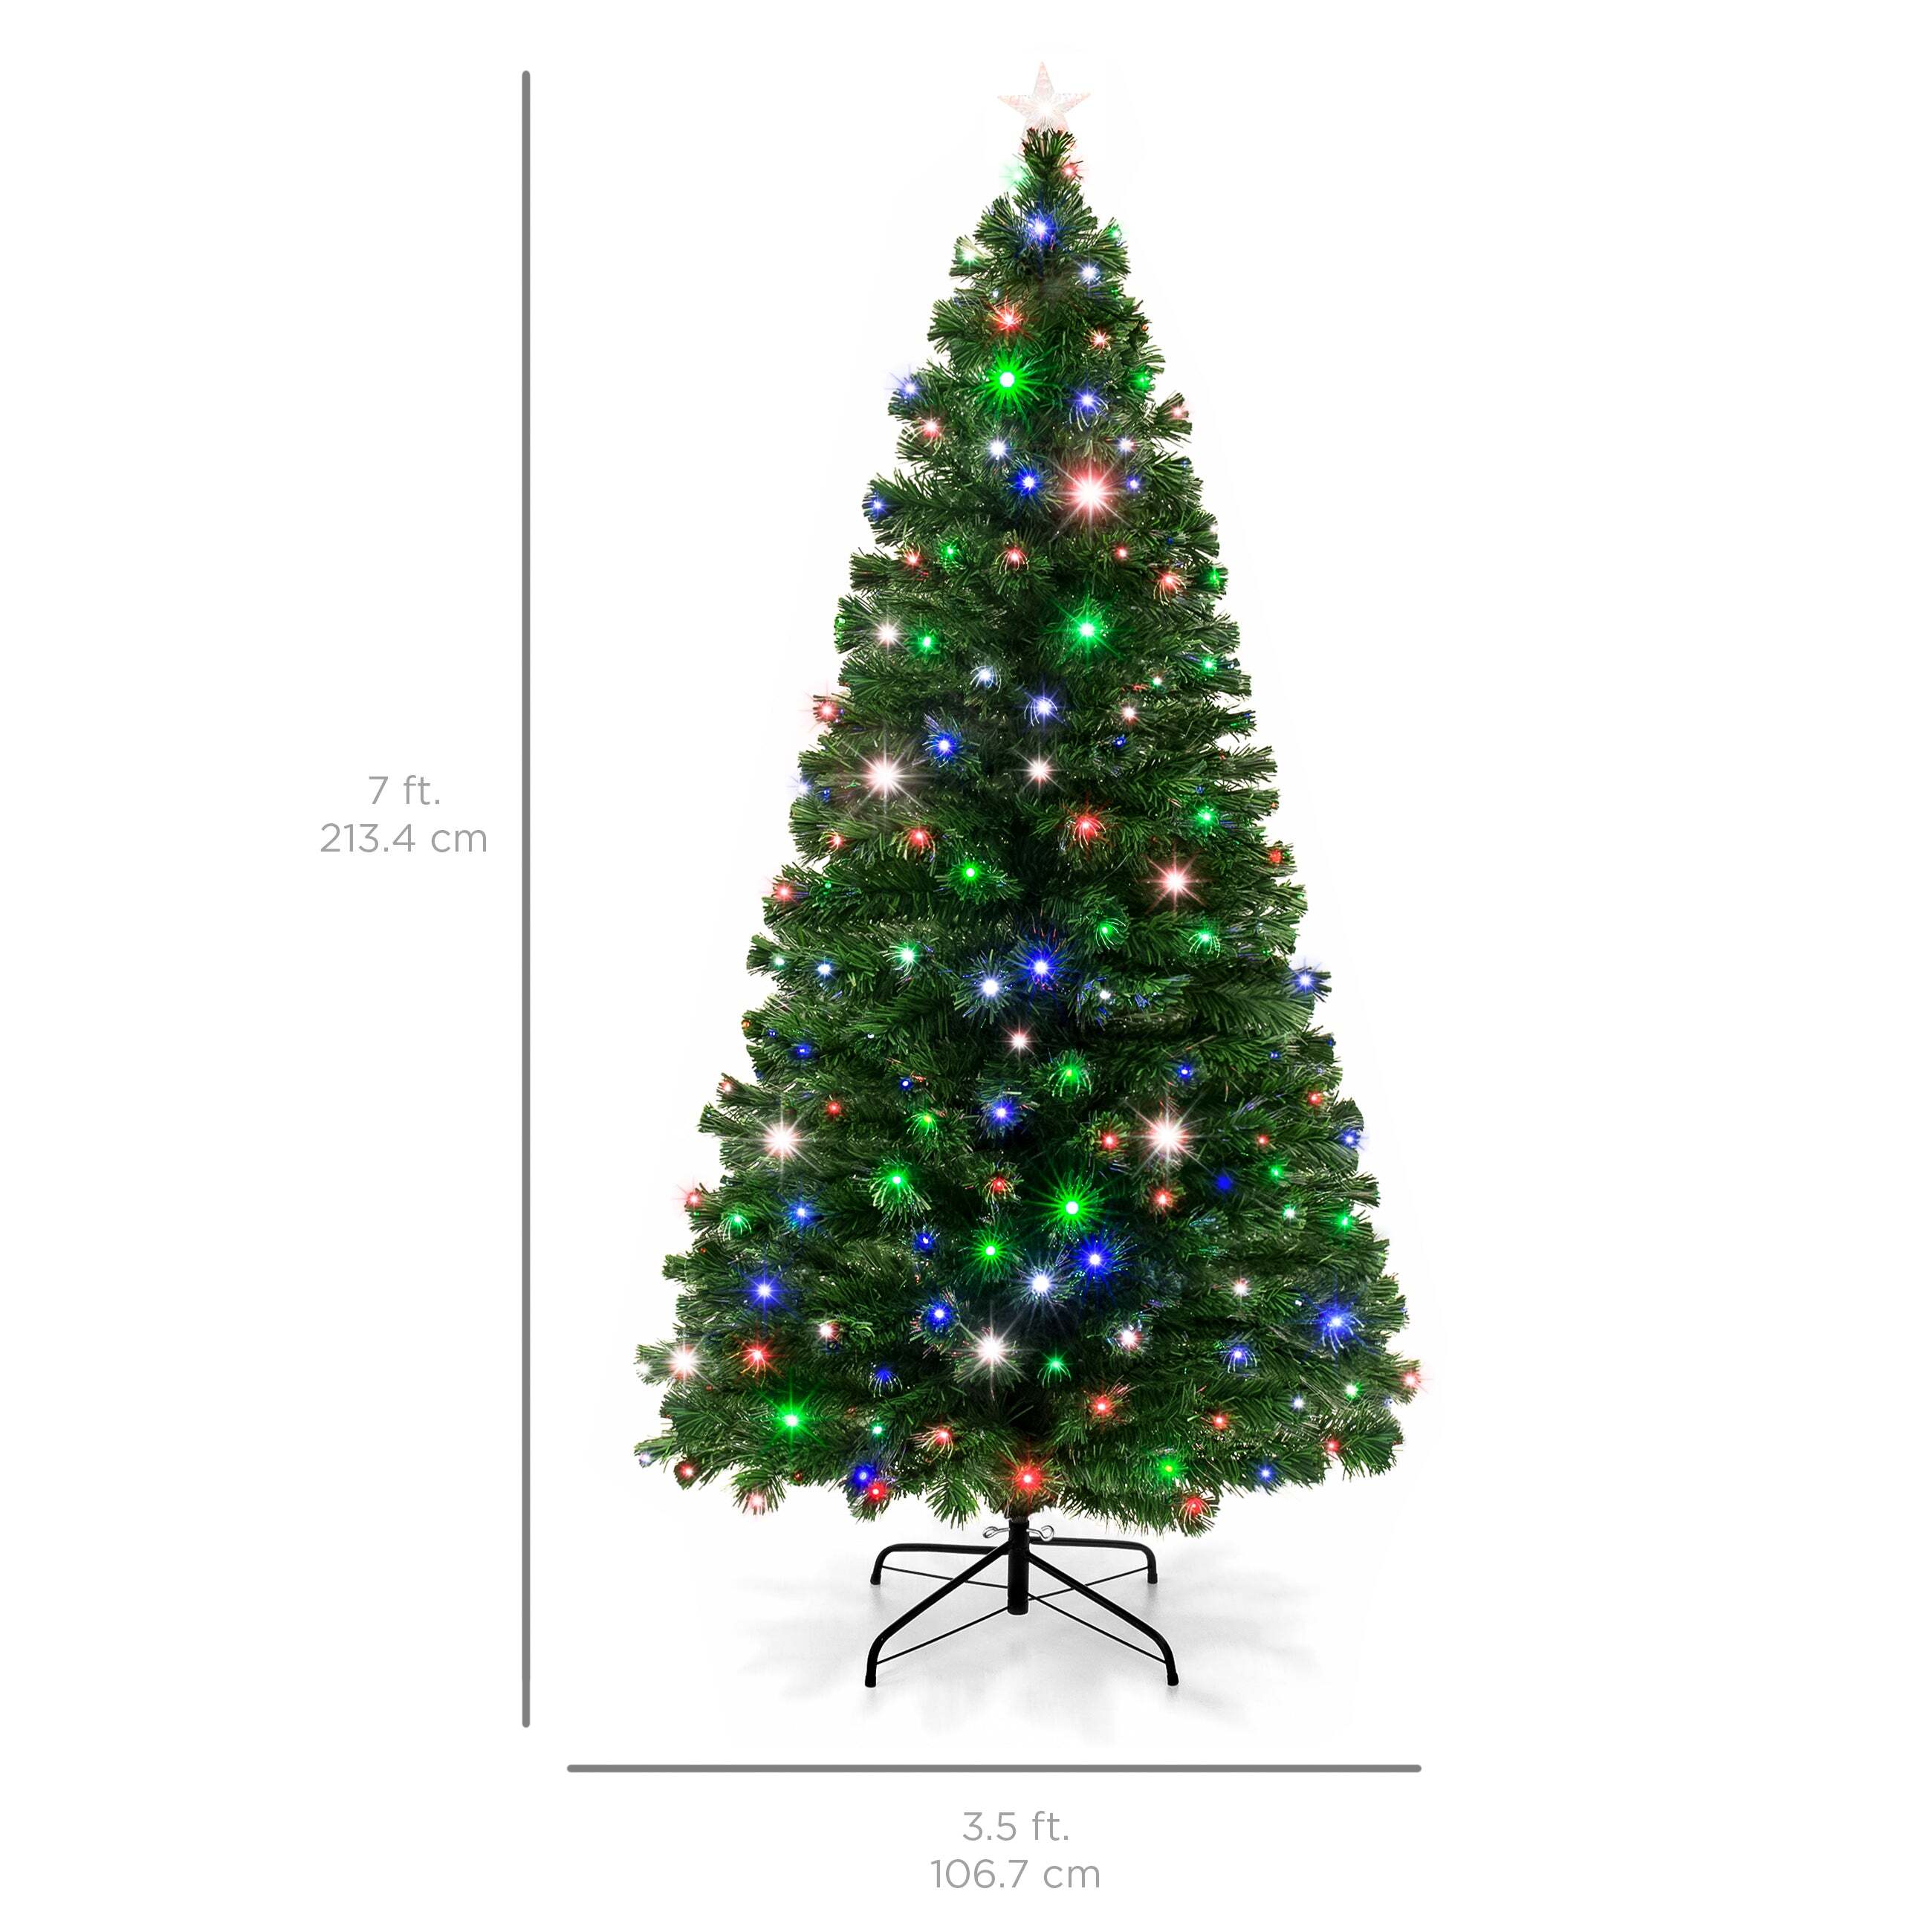 7ft Fiber Optic Artificial Christmas Pine Tree w/ 280 Lights, Stand